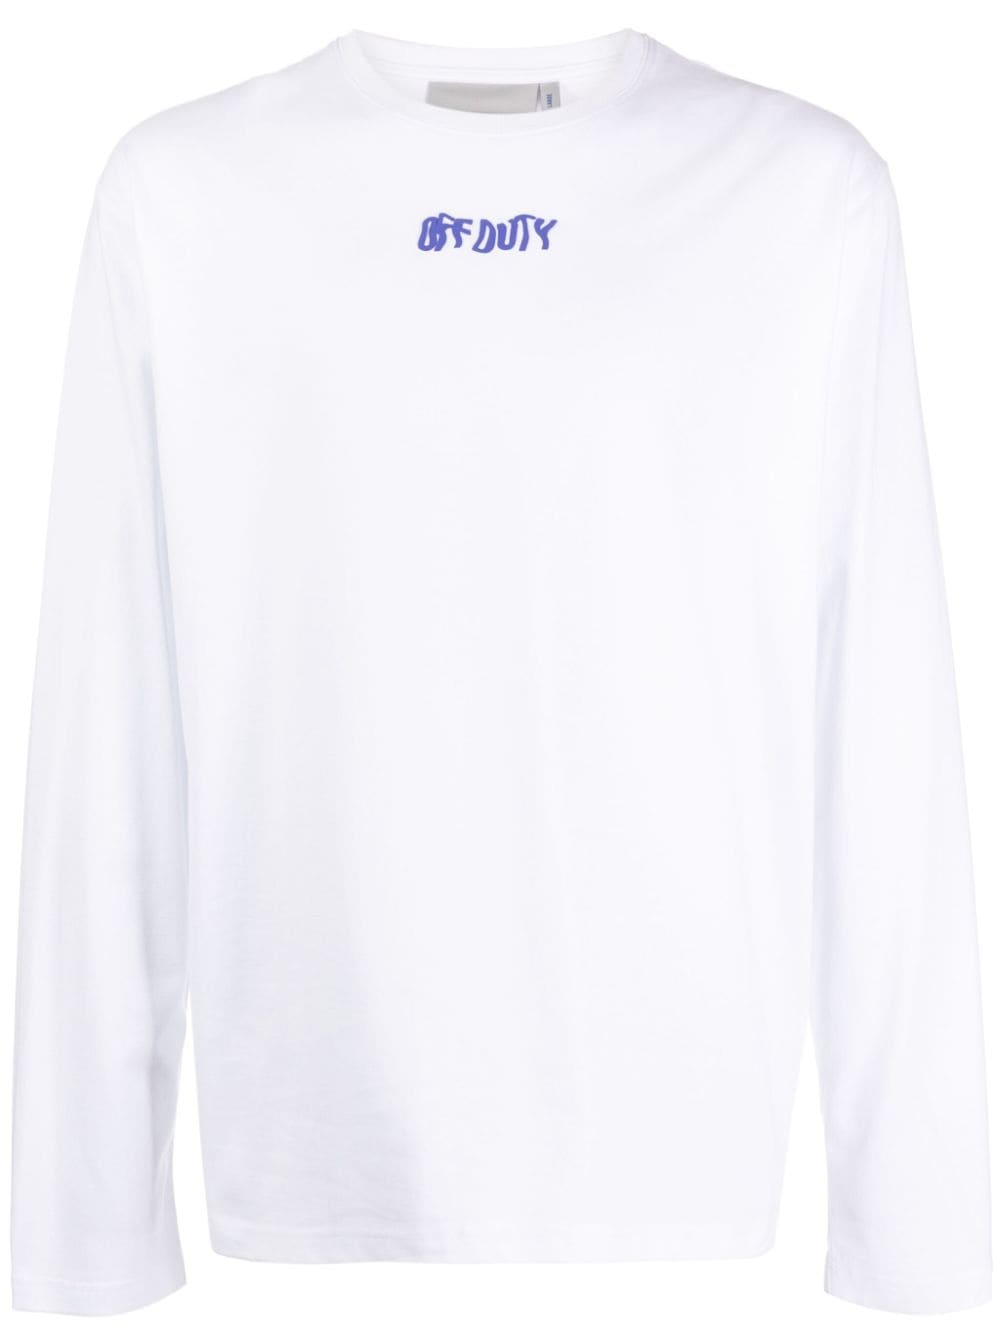 Off Duty Stay Wavy long-sleeve T-shirt - White von Off Duty